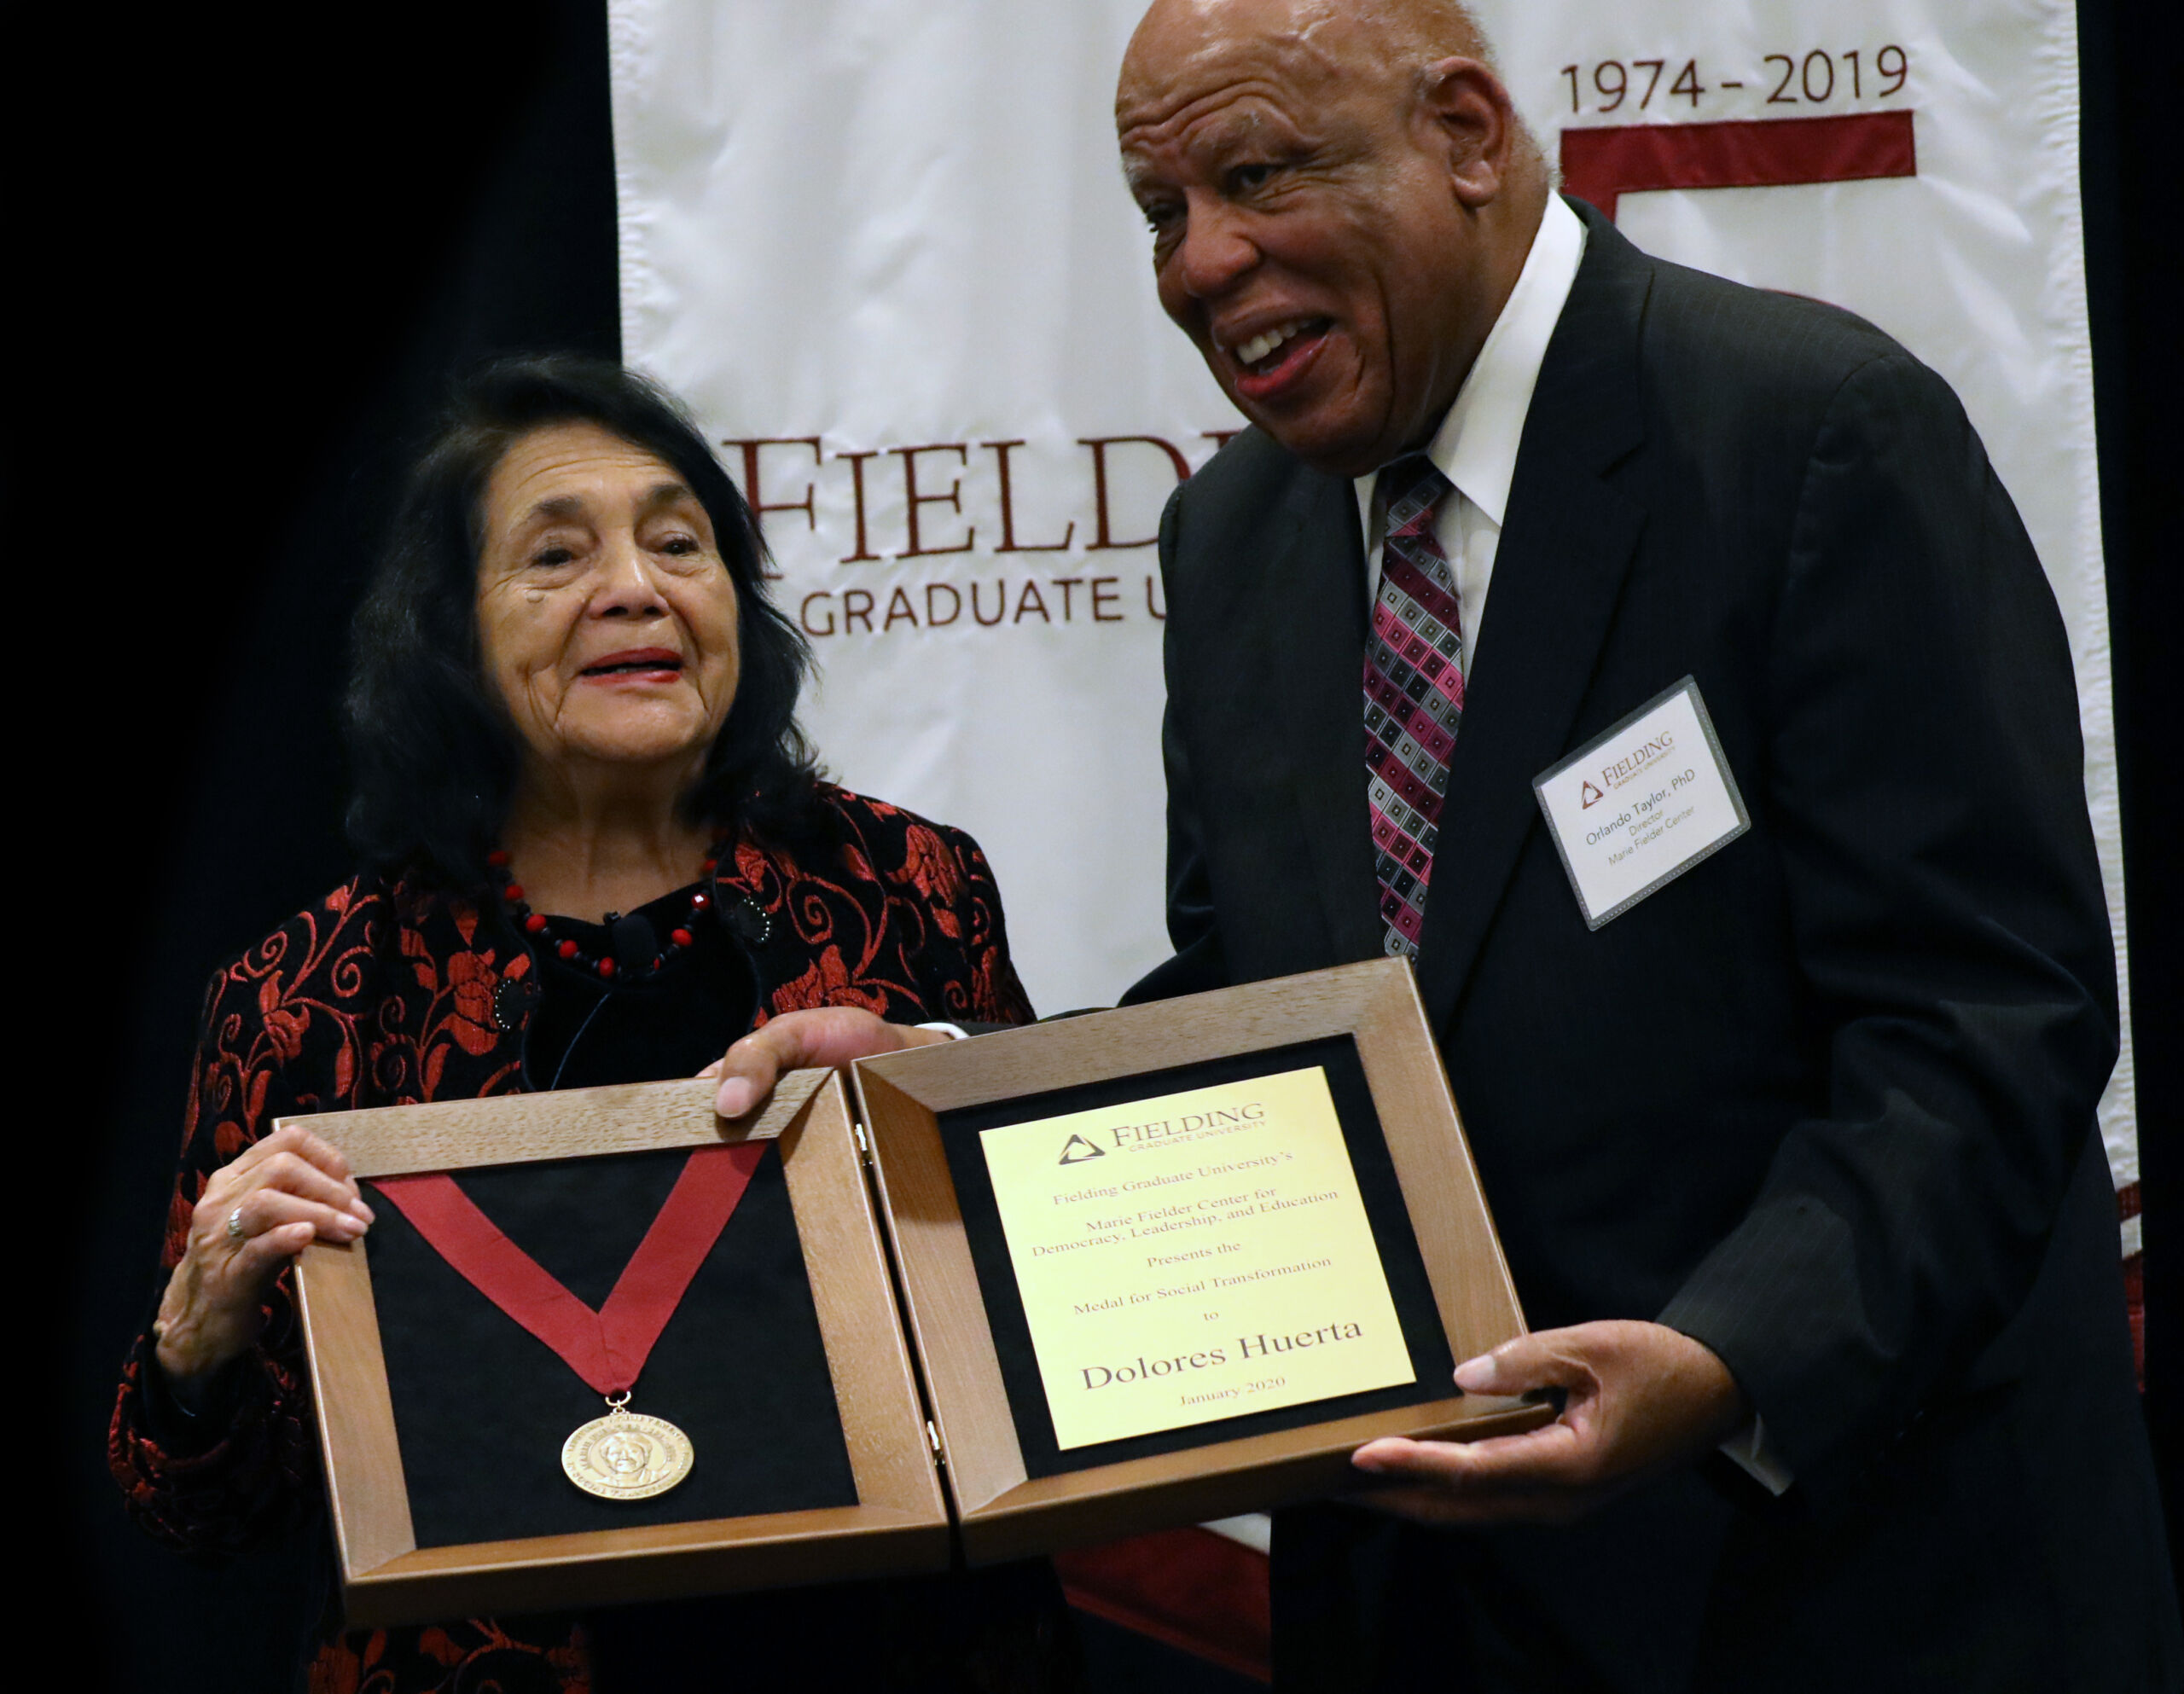 Dr. Taylor awards Delores Huerta the Marie Fielder Medal for Social Transformation on January 10, 2020, in Santa Barbara, California.